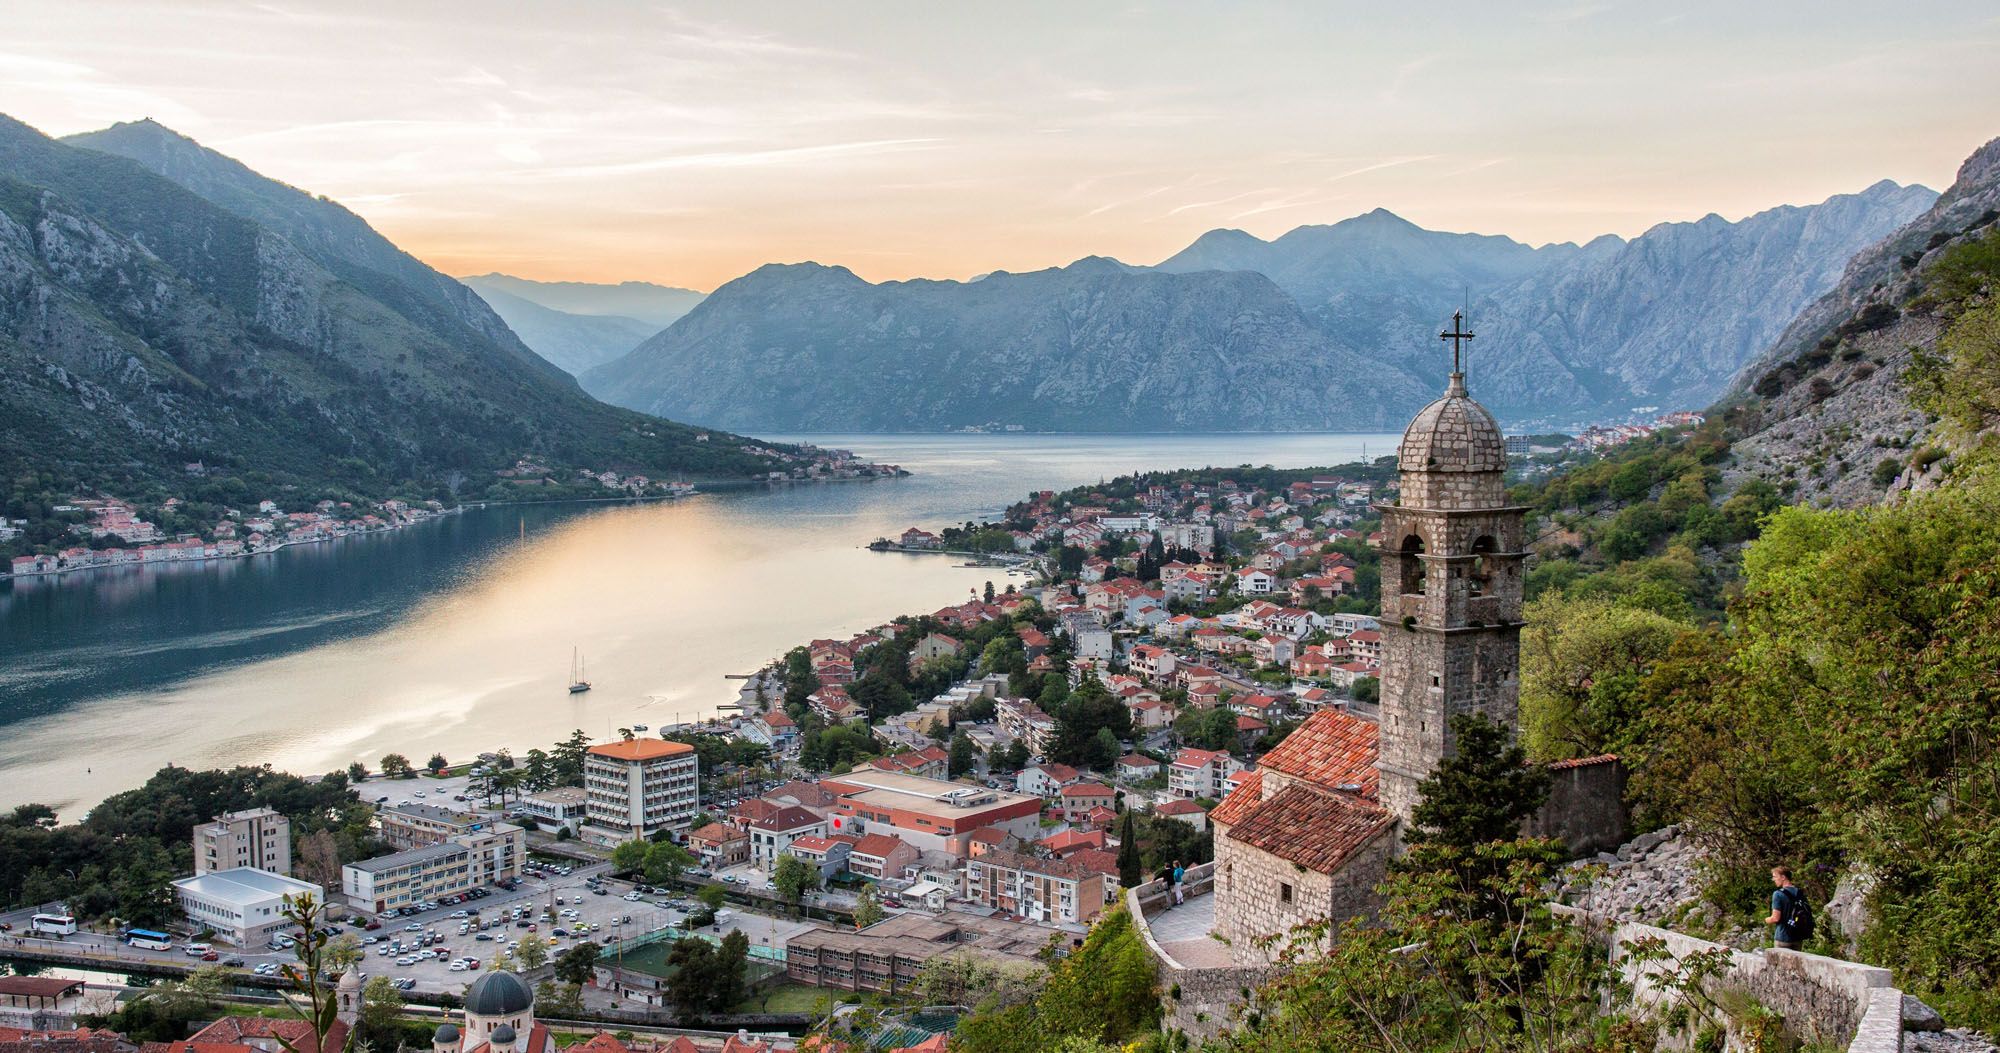 Featured image for “10 Epic Days on the Balkan Peninsula: Croatia, Montenegro, and Bosnia & Herzegovina”